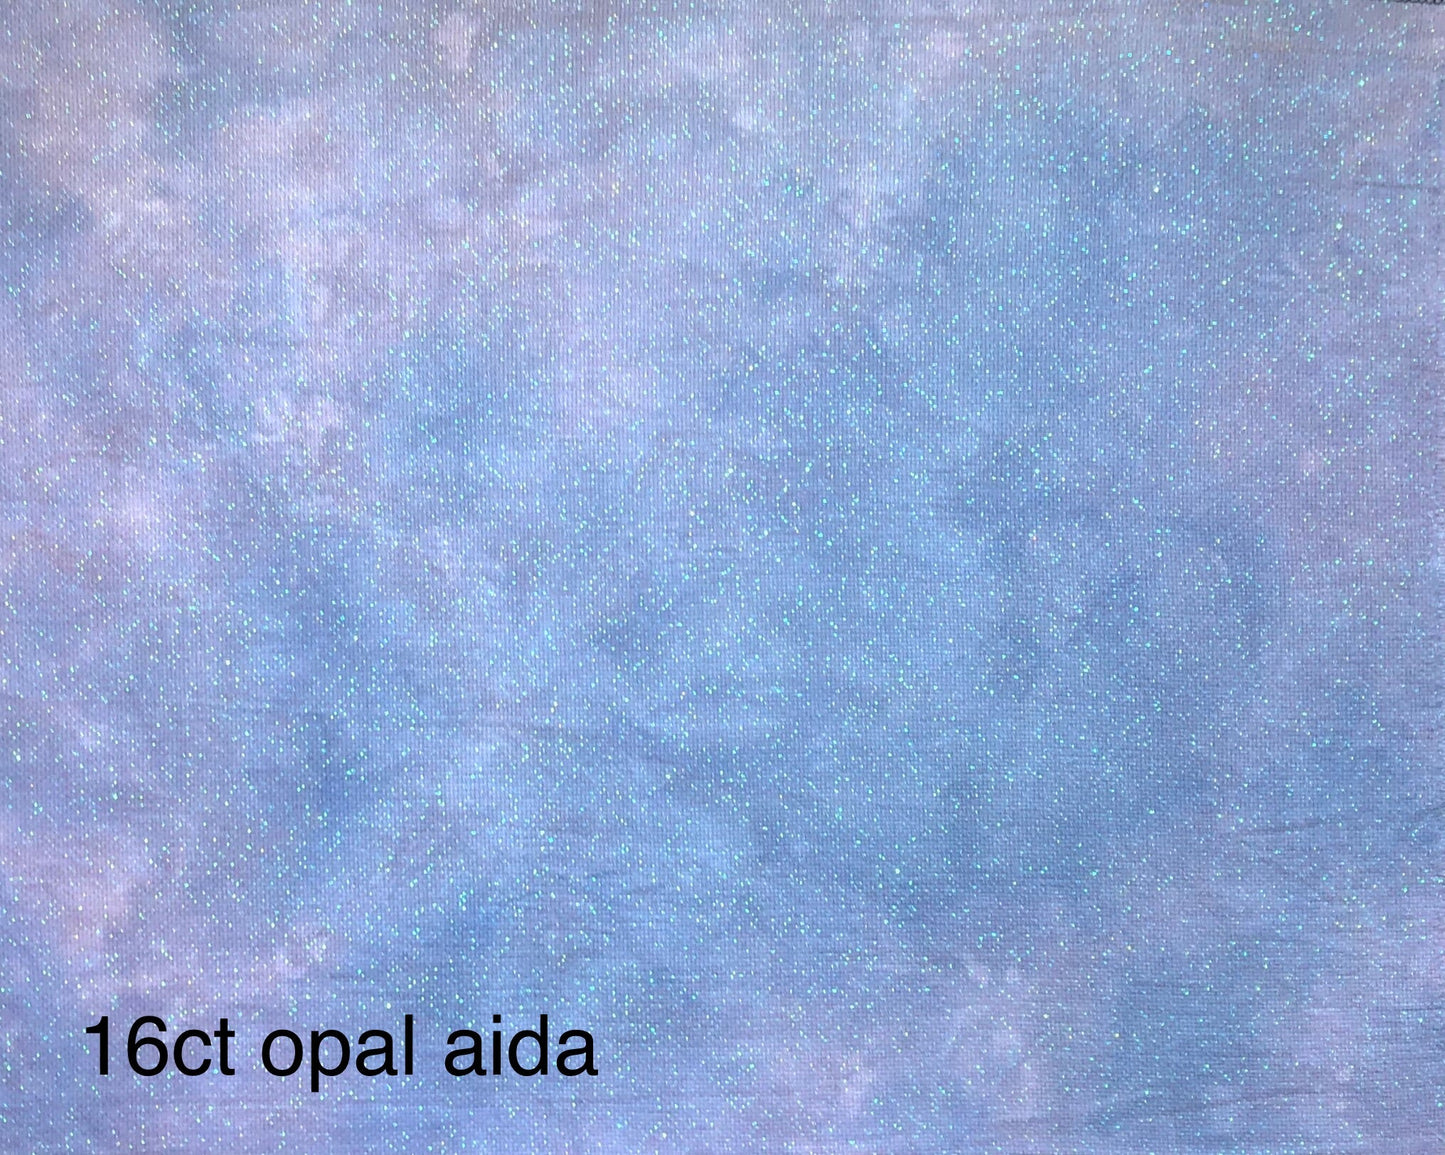 Aida - Bedrock - Dyeing for Cross Stitch